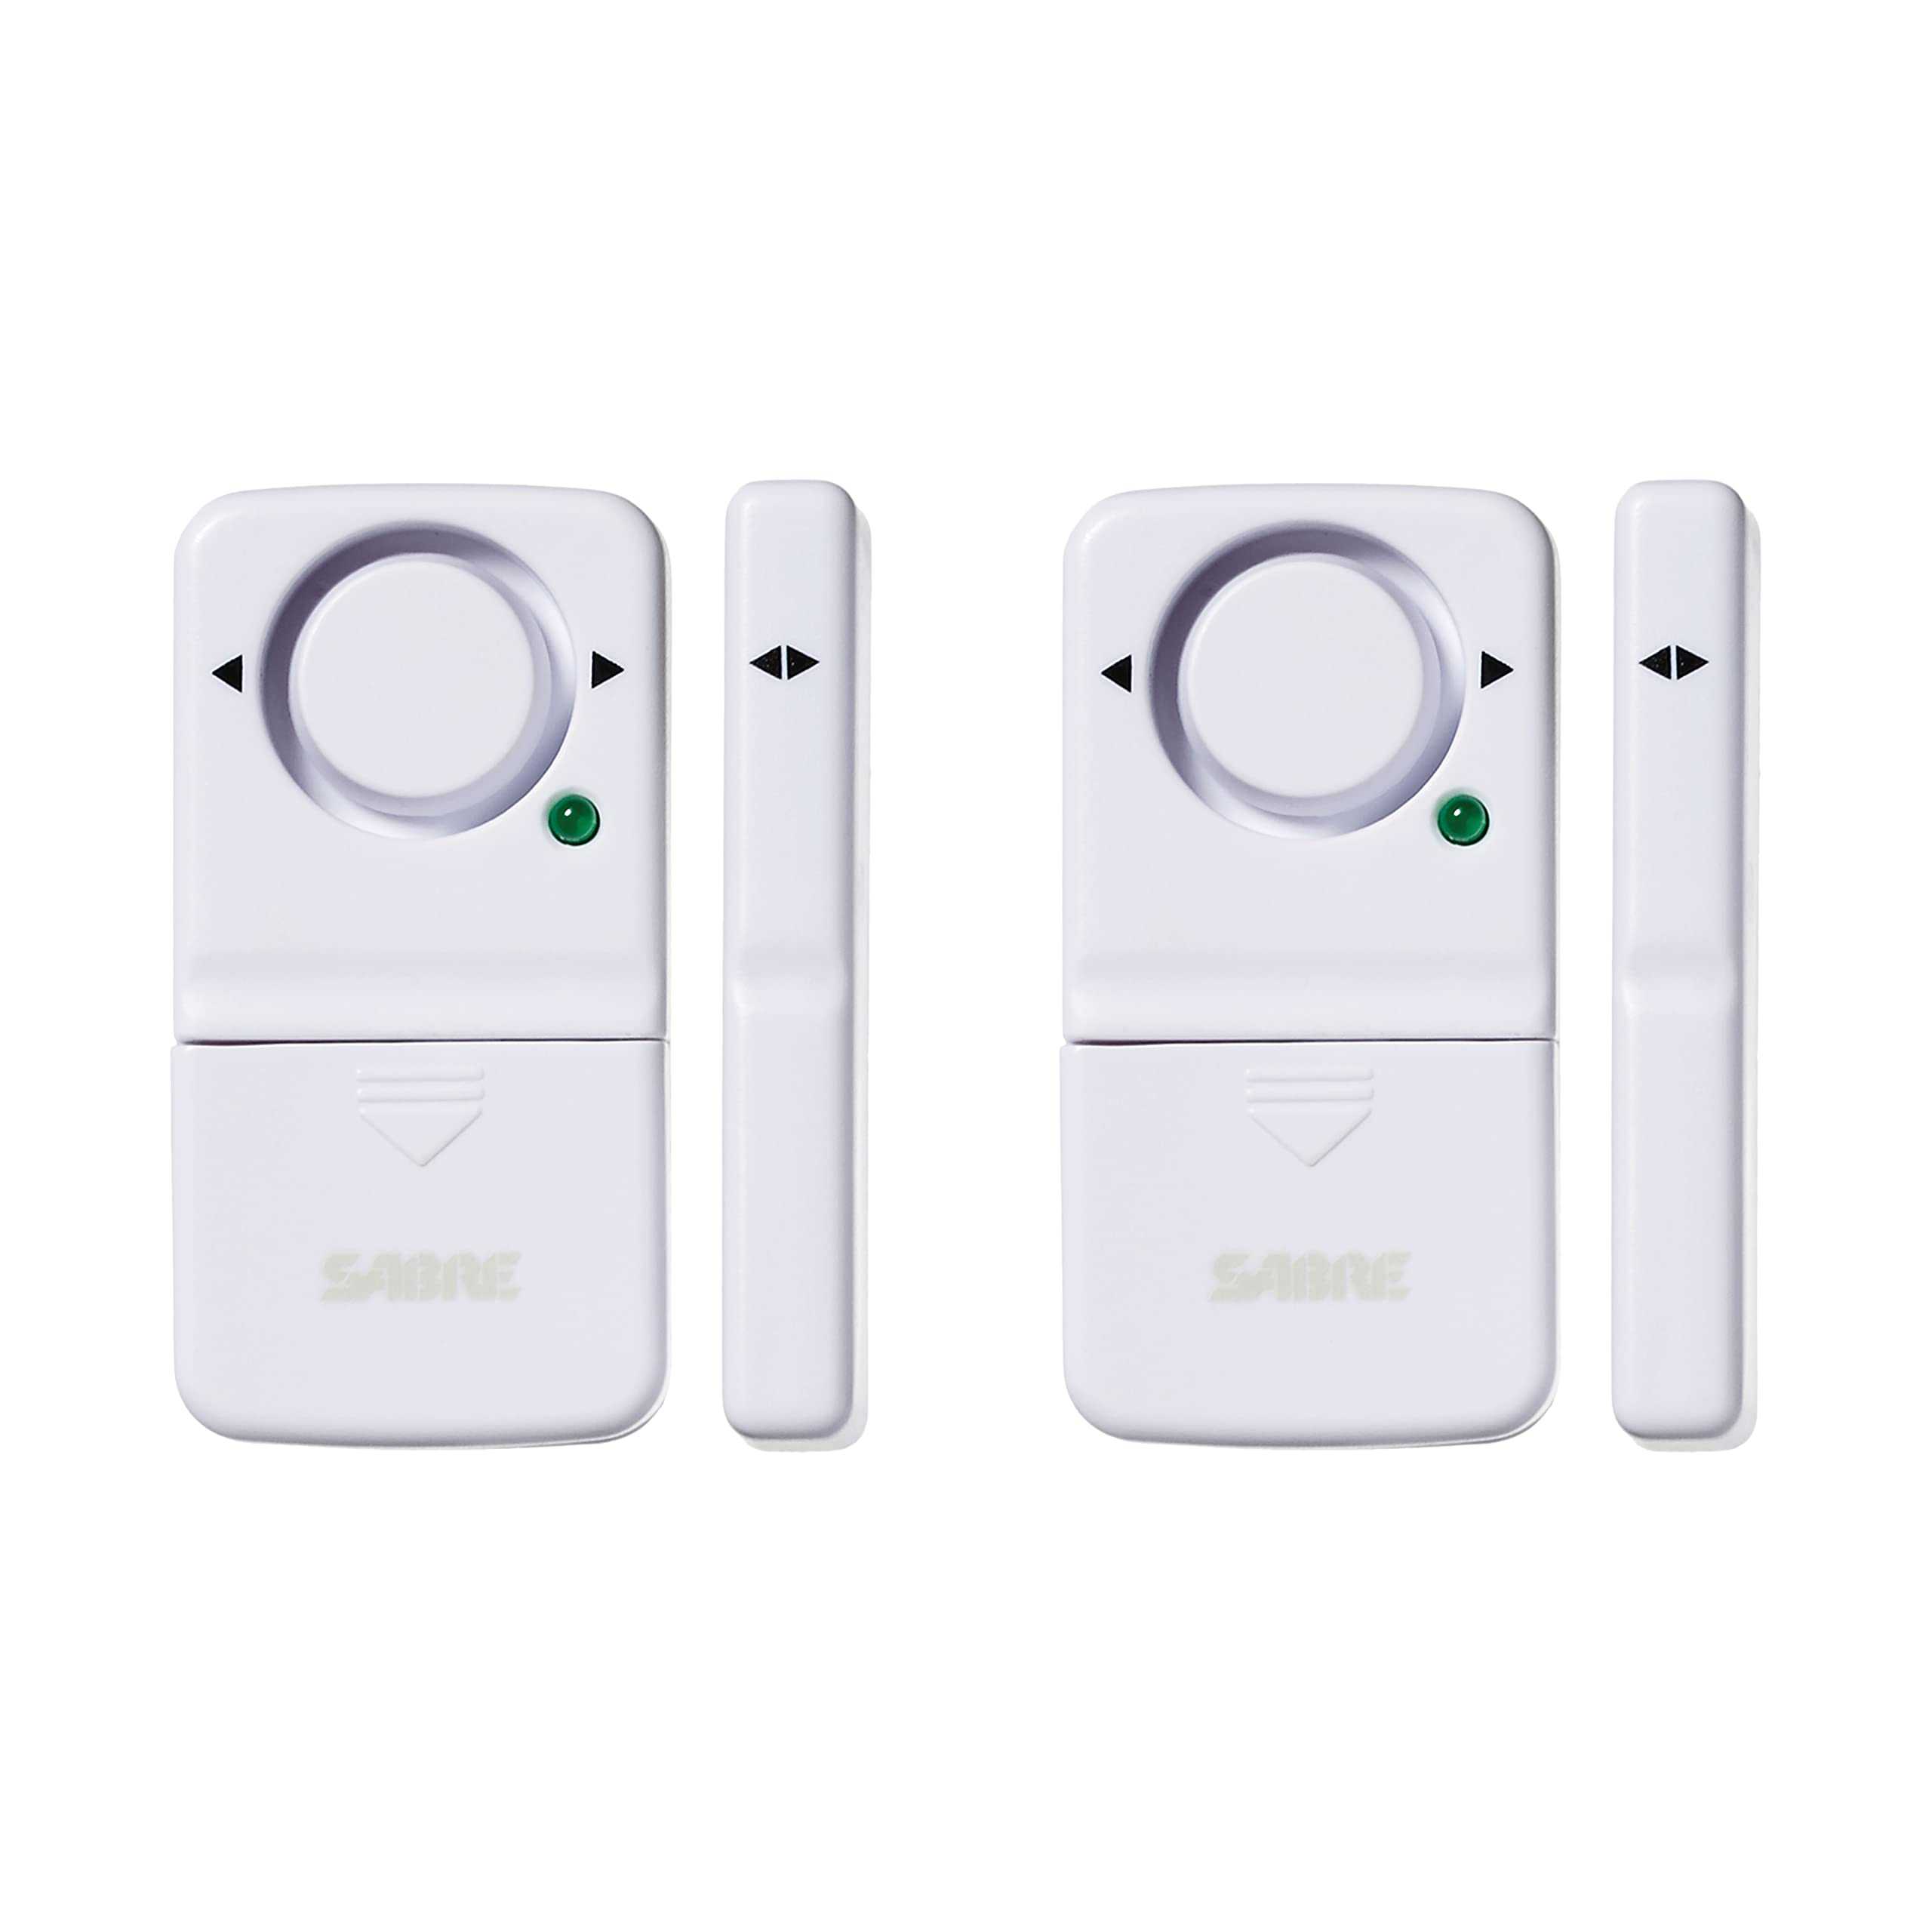 SABRE Wireless Home Security Window Alarm